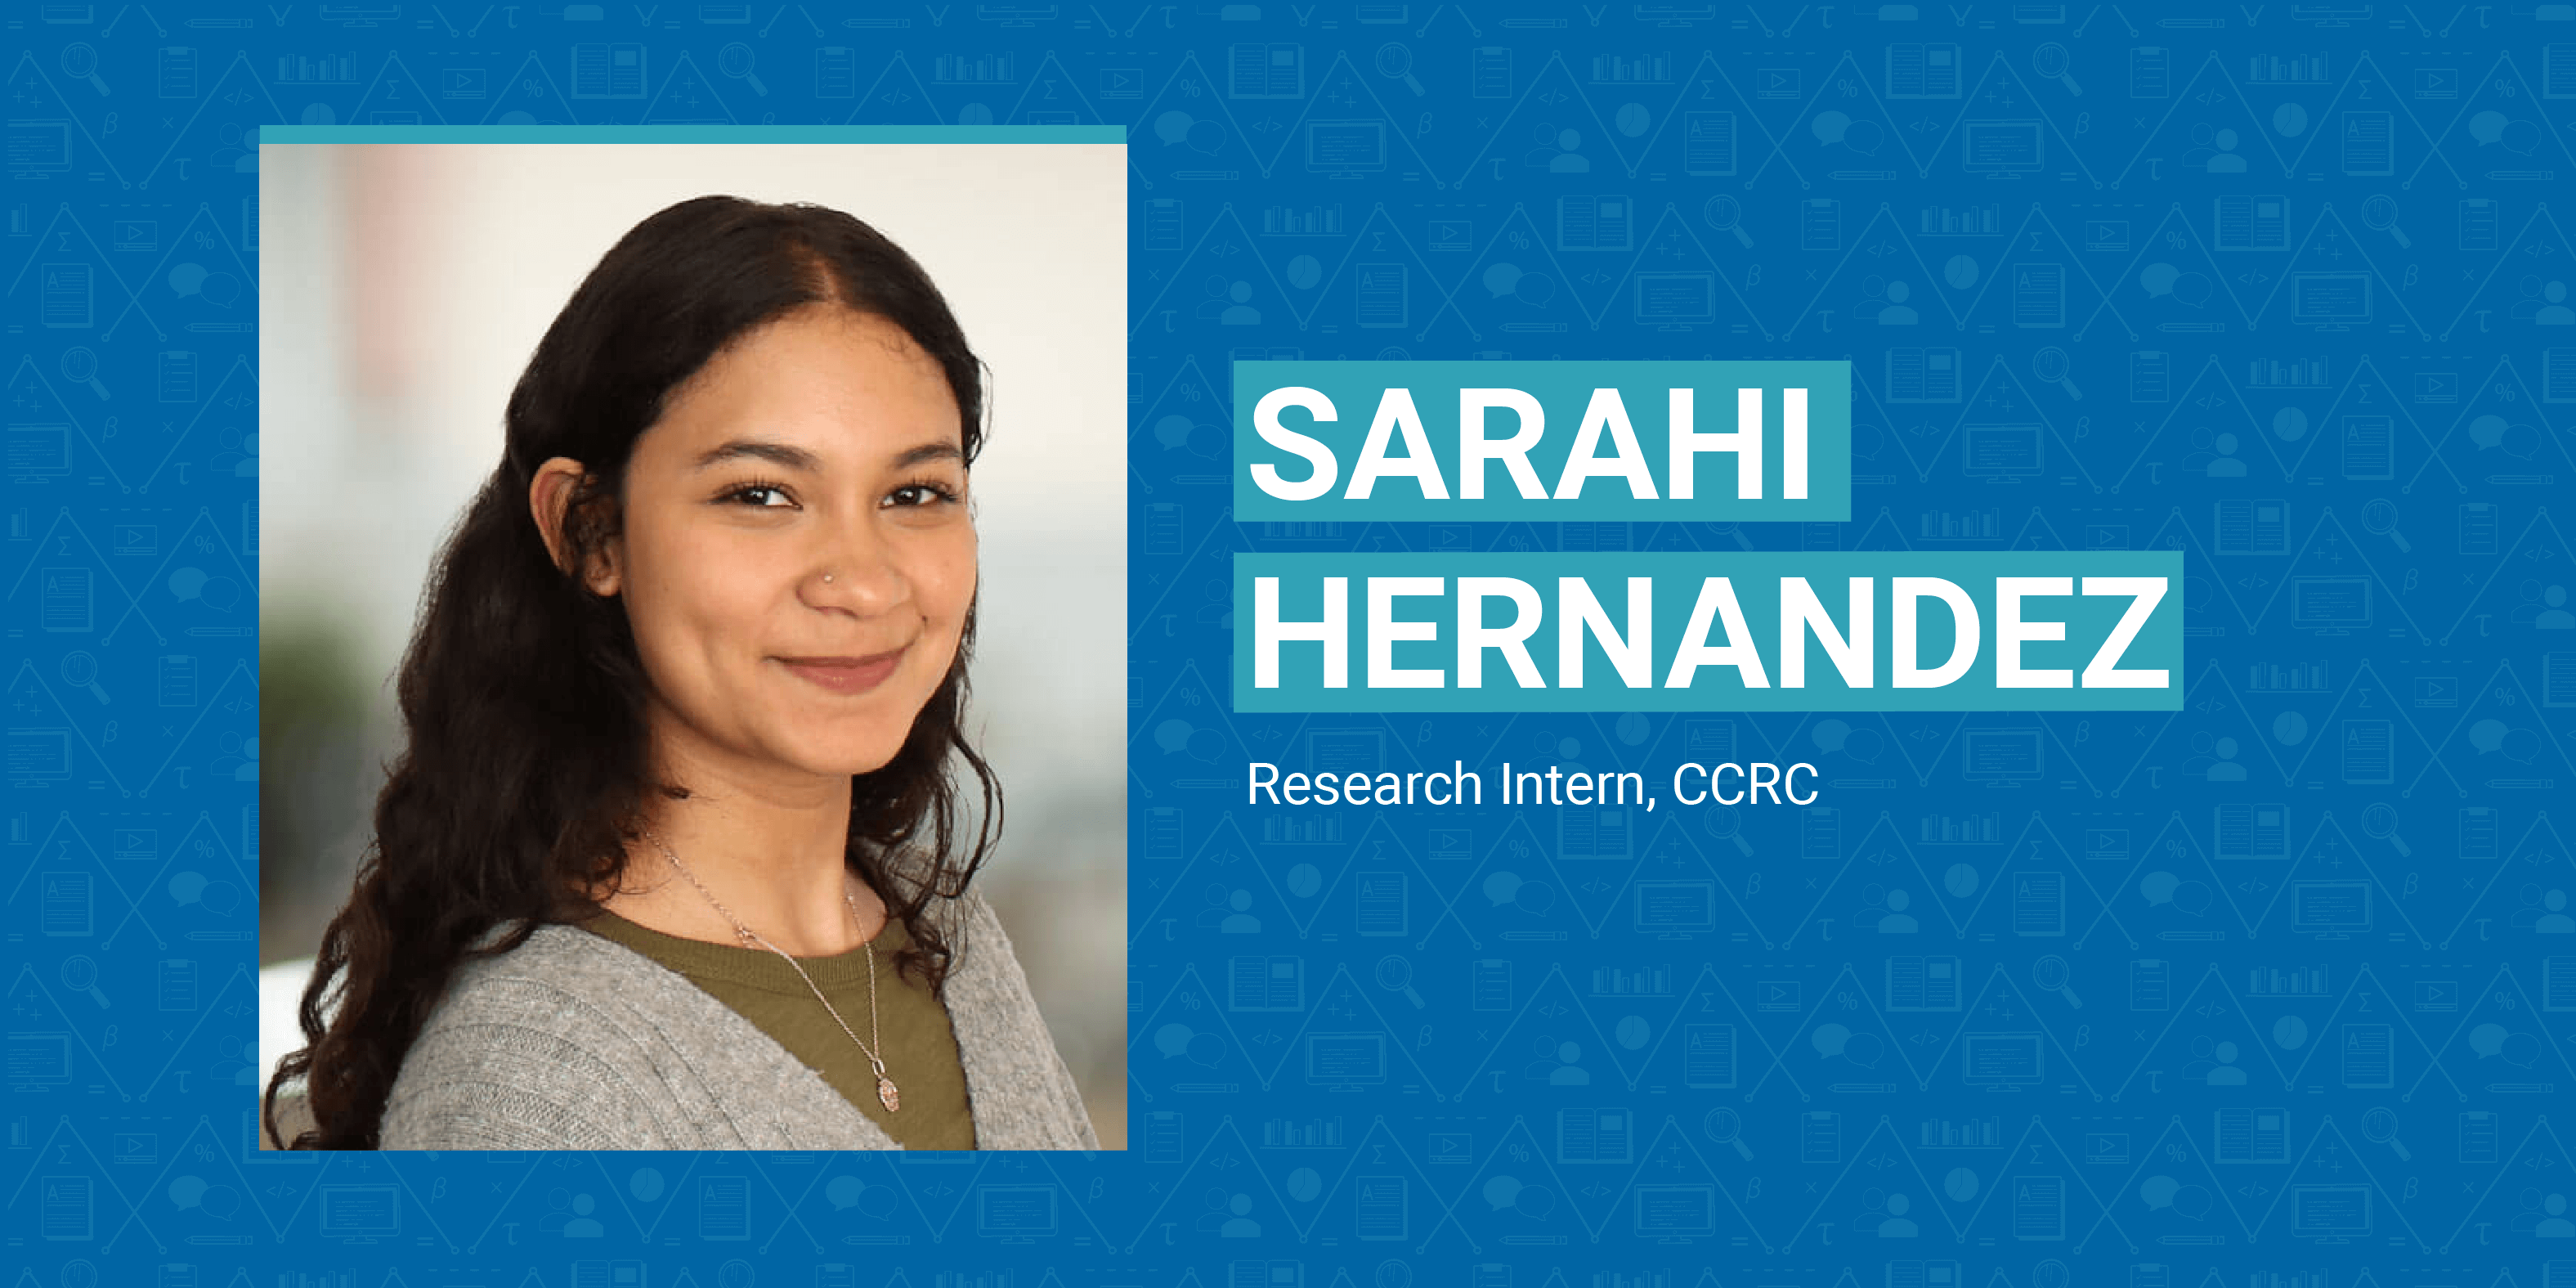 Headshot of Sarahi Hernandez, Research Intern at CCRC